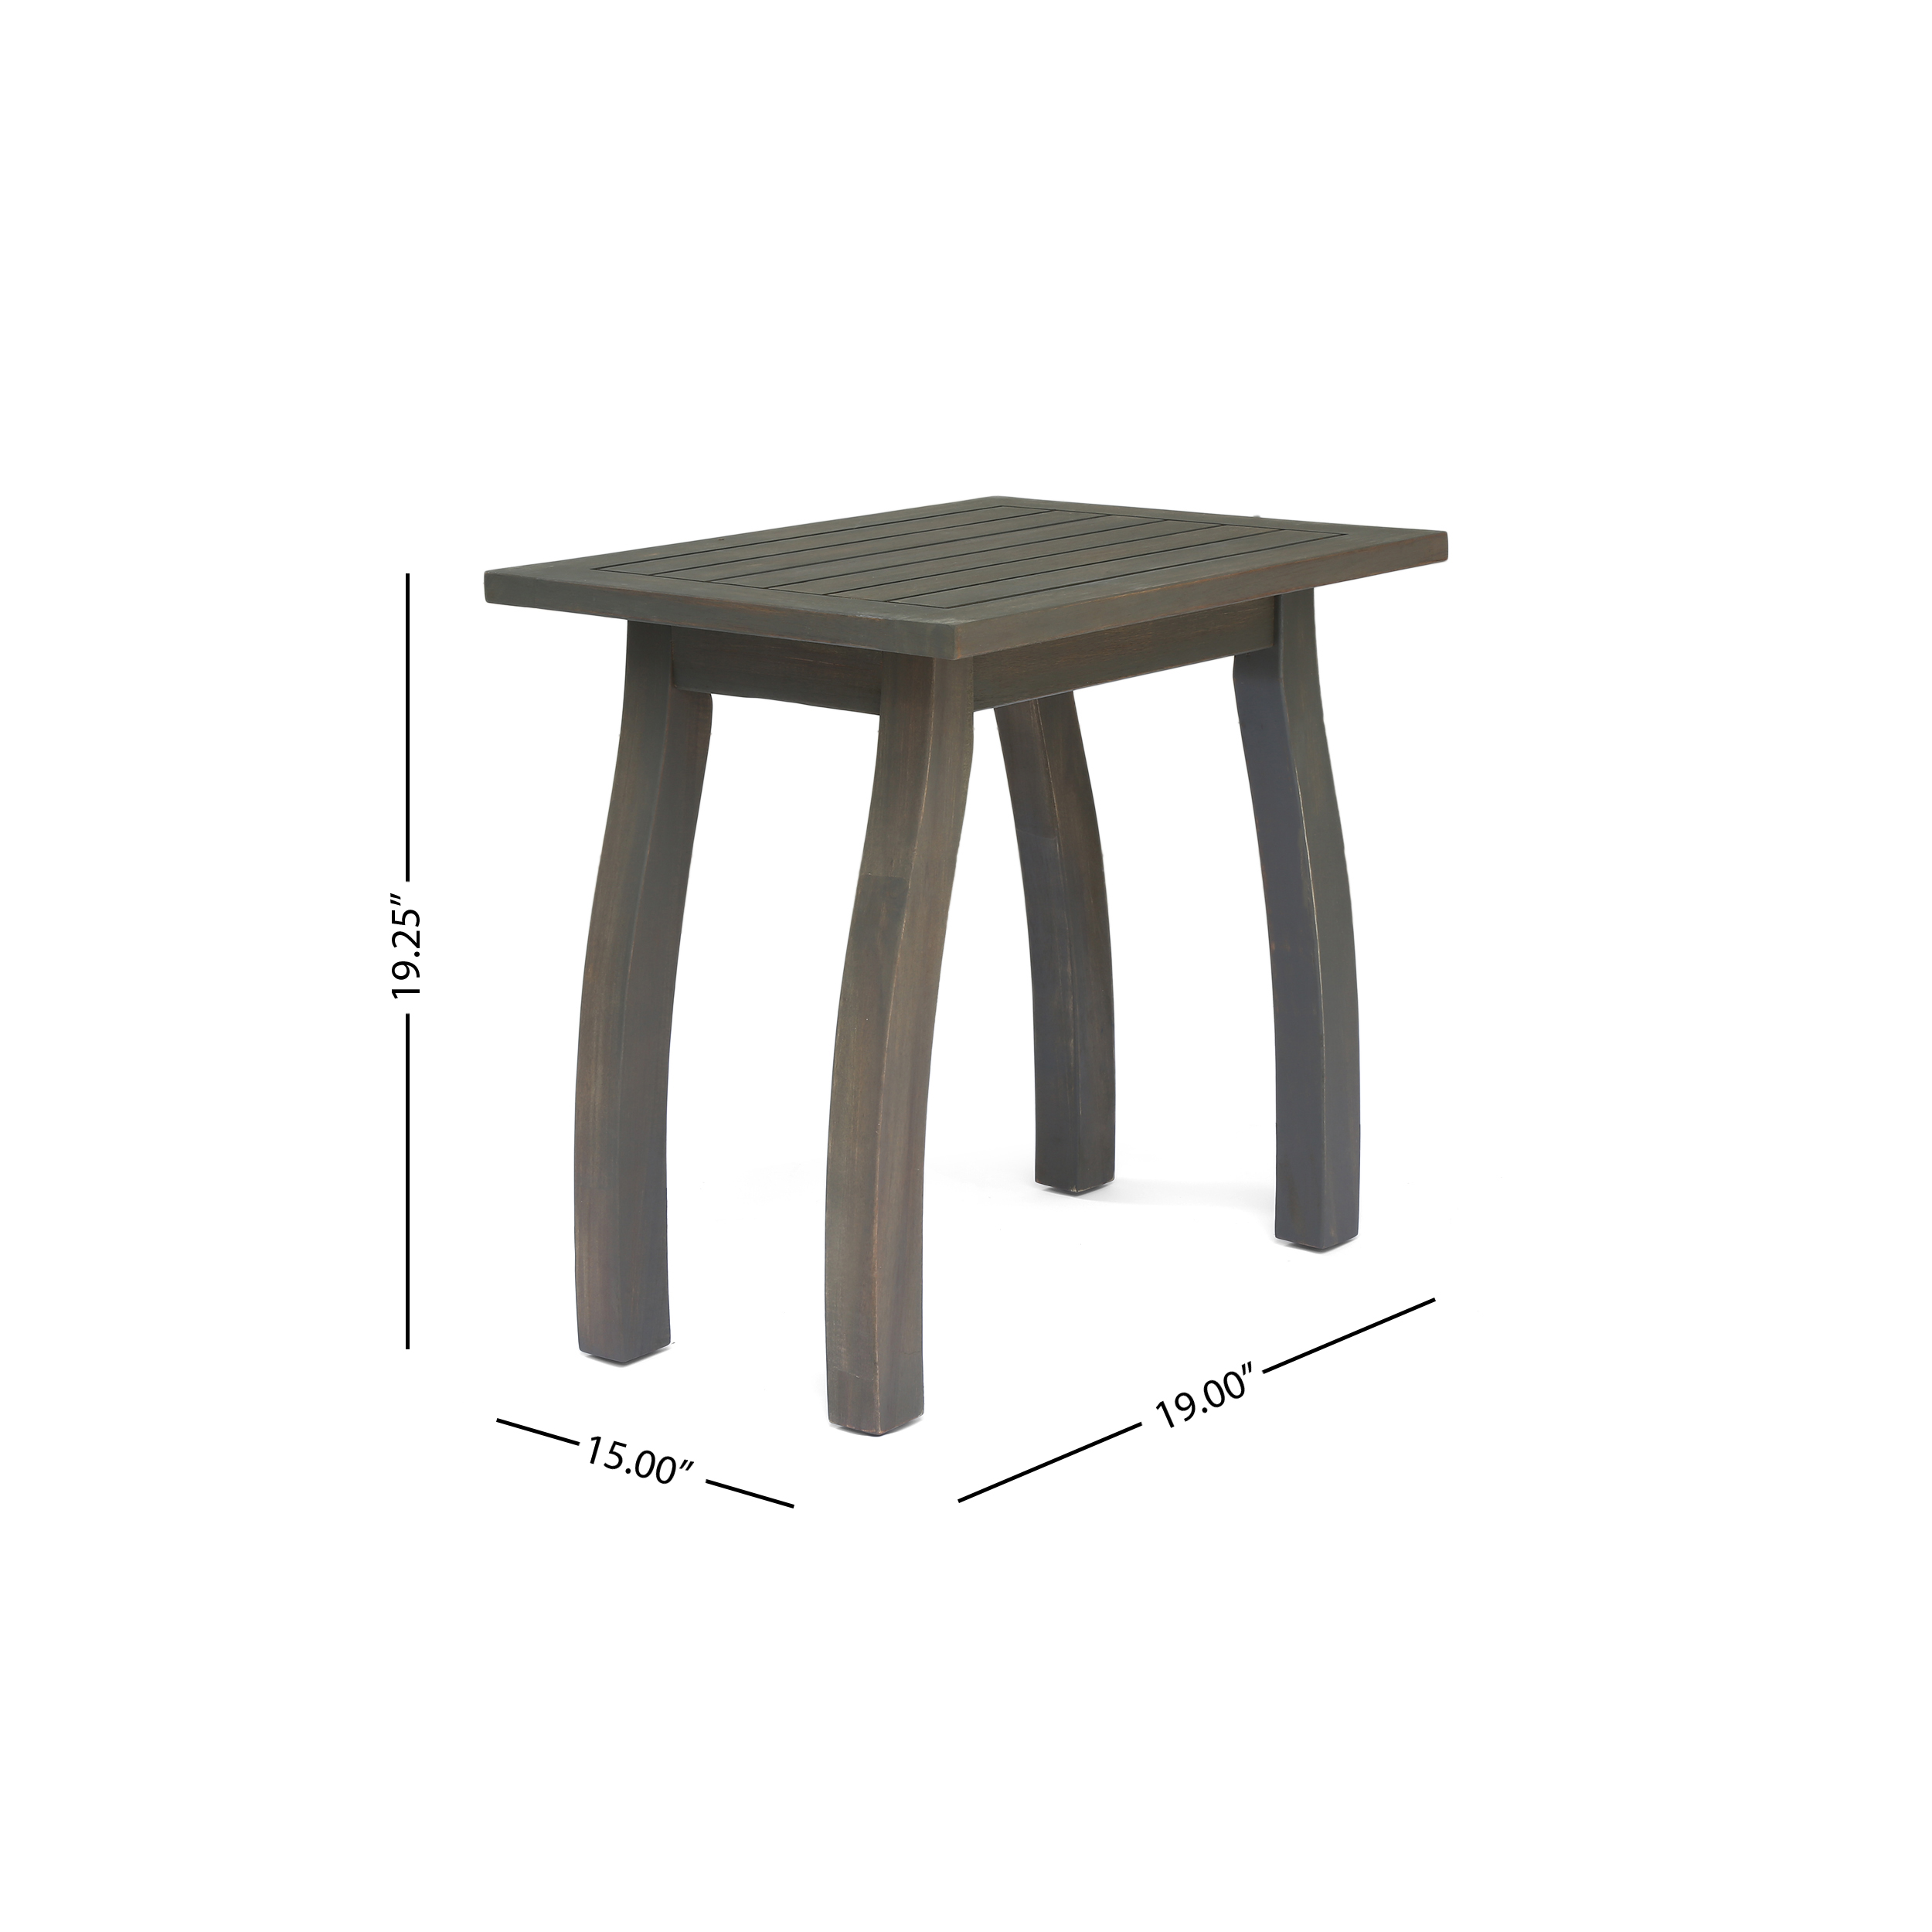 Aliya Outdoor Acacia Wood Rocking Chair and Side Table Set, Gray - image 2 of 4